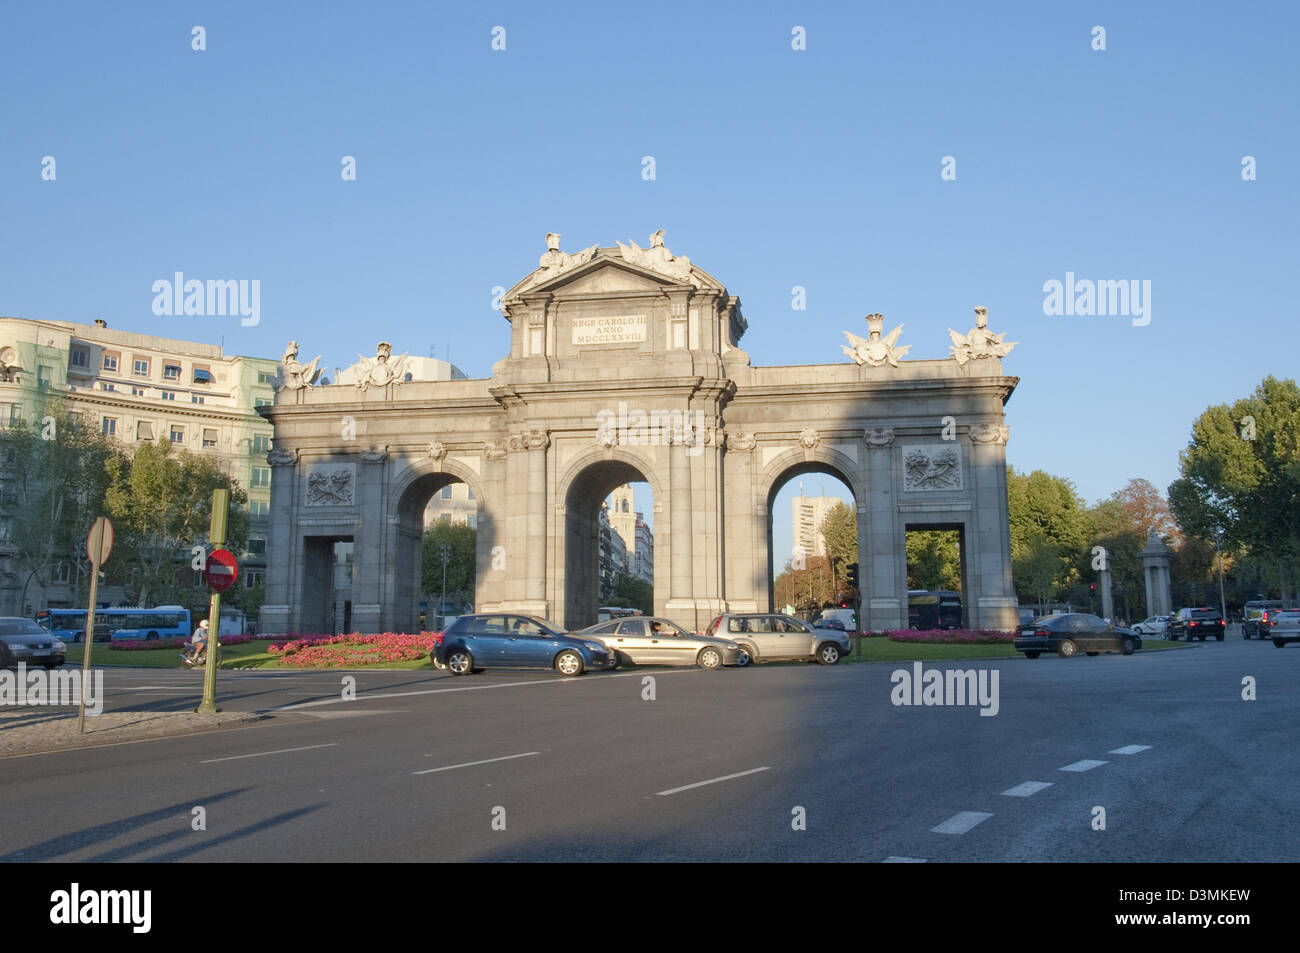 Puerta de Alcalá in Madrid Spain Stock Photo